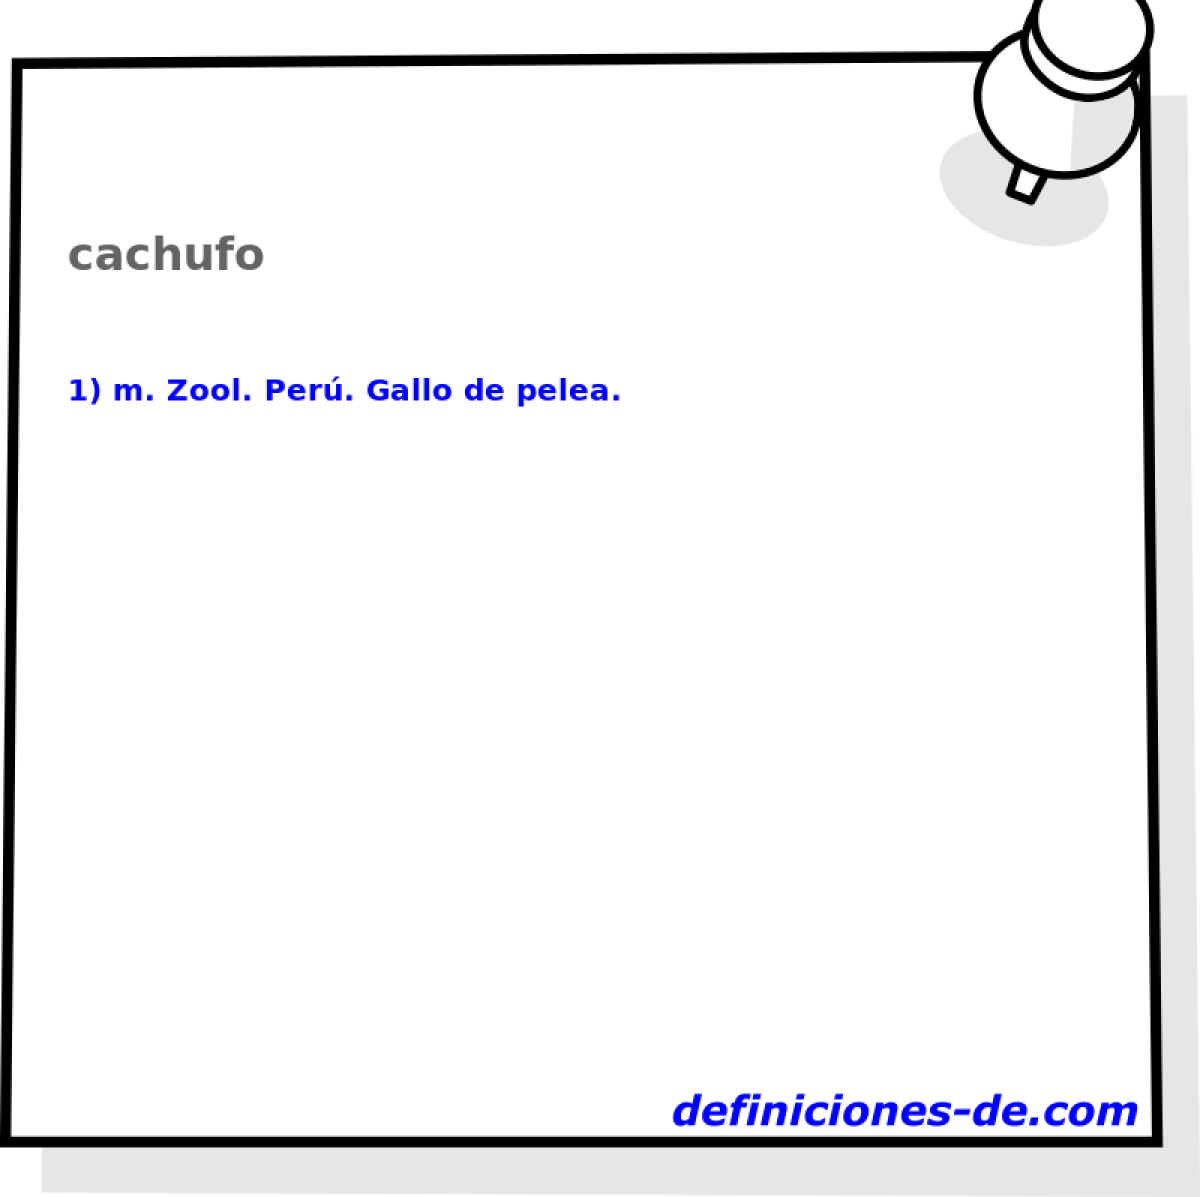 cachufo 